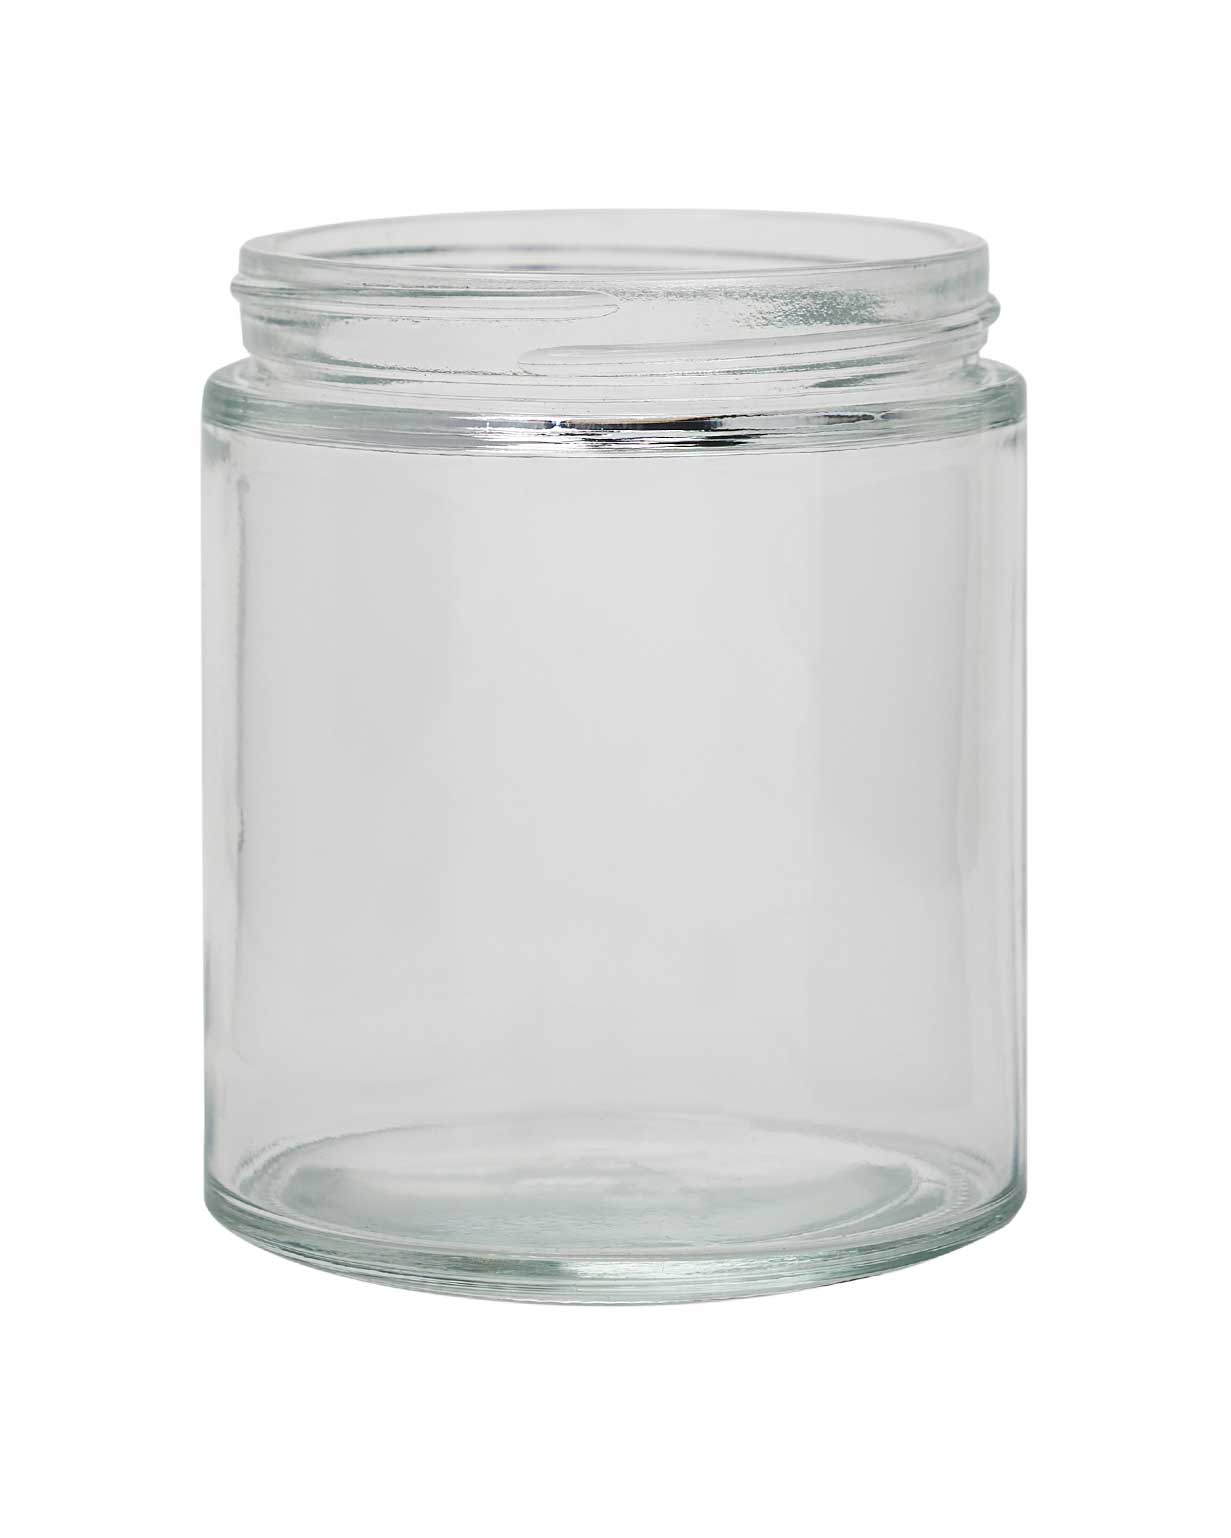 6 oz glass flint straight sided wide mouth jar 63-400